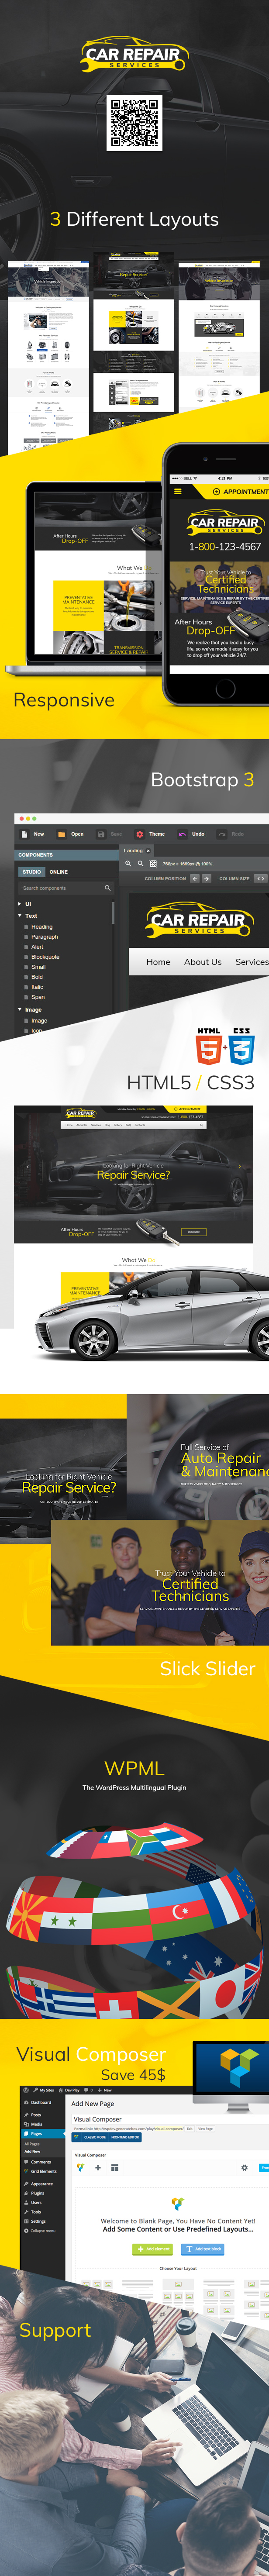 Car Repair Services & Auto Mechanic WordPress Theme - 4